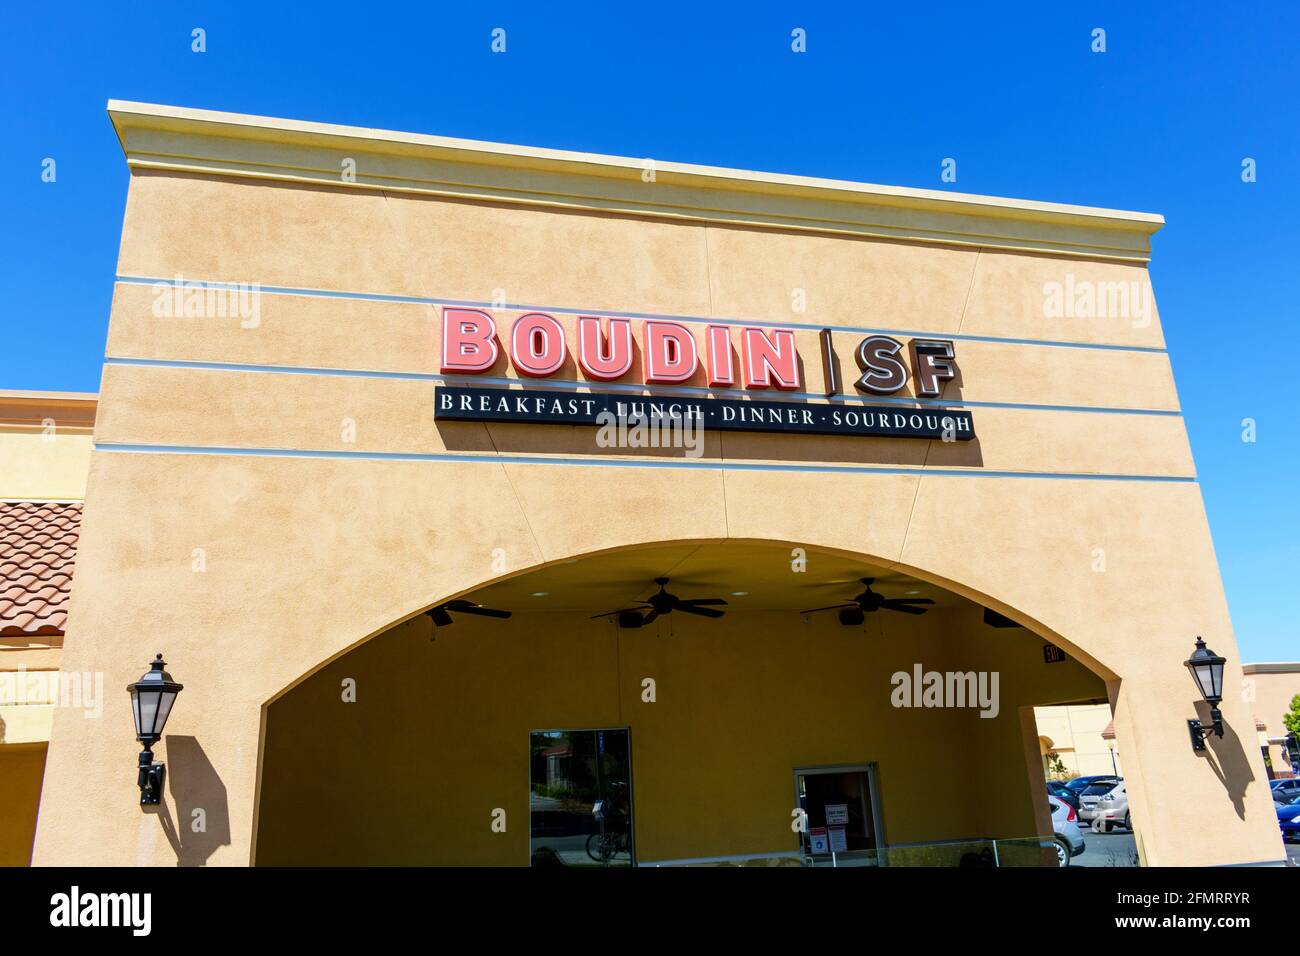 Boudin Bakery sign, logo above the entrance to the cafe location - San Jose California, USA - 2021 Stock Photo